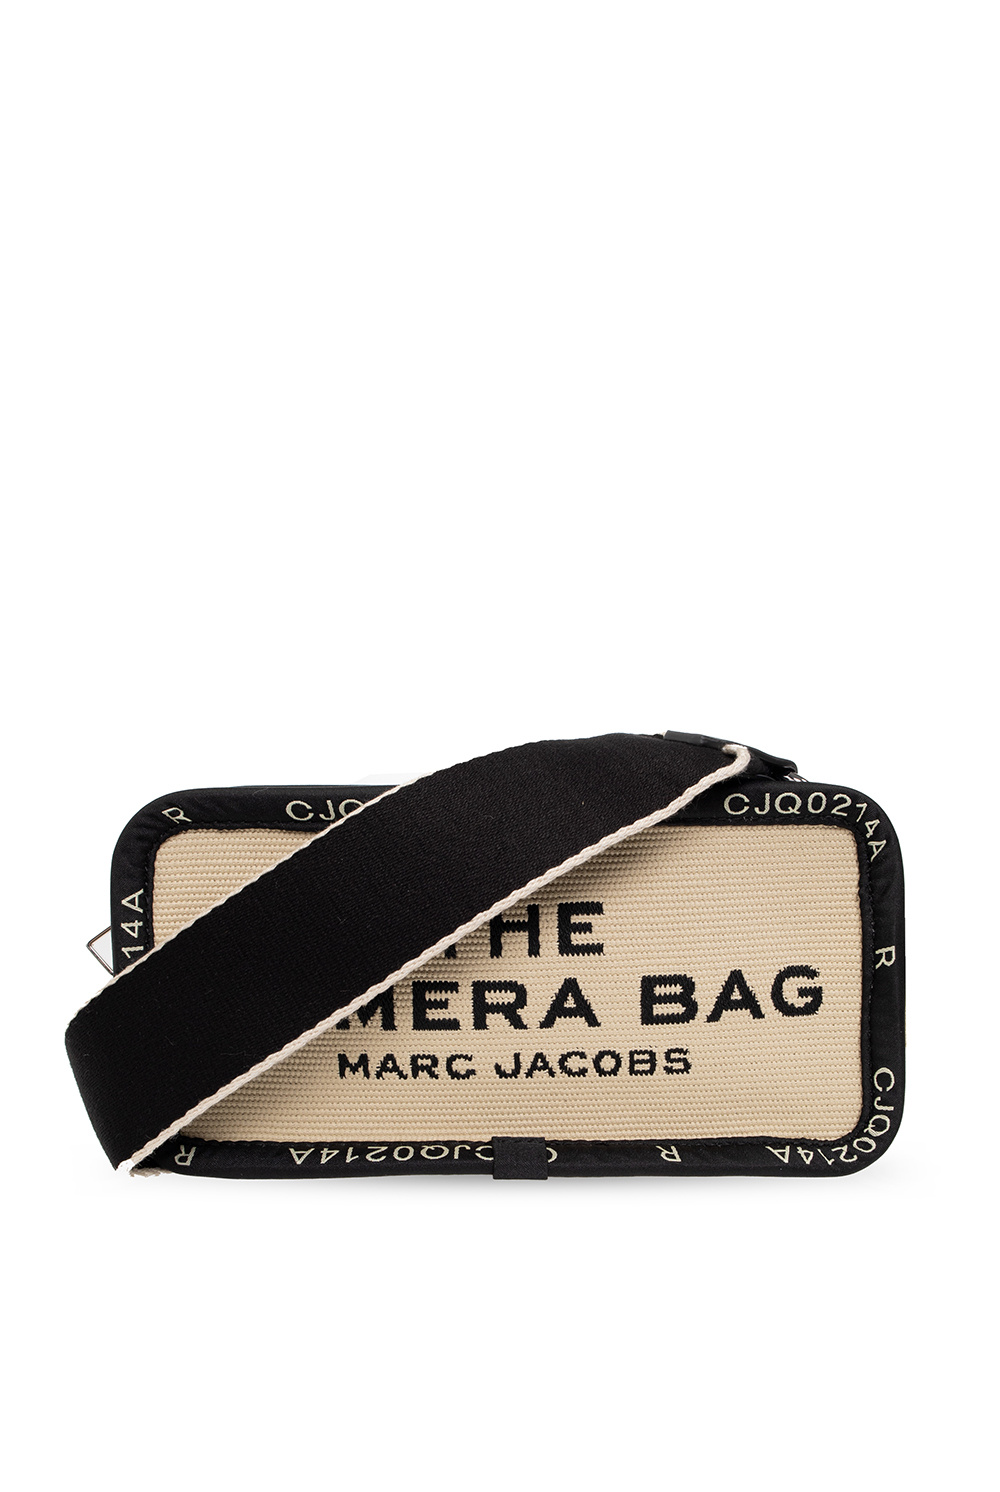 Black 'The Camera Bag' shoulder bag Marc Jacobs - Vitkac GB